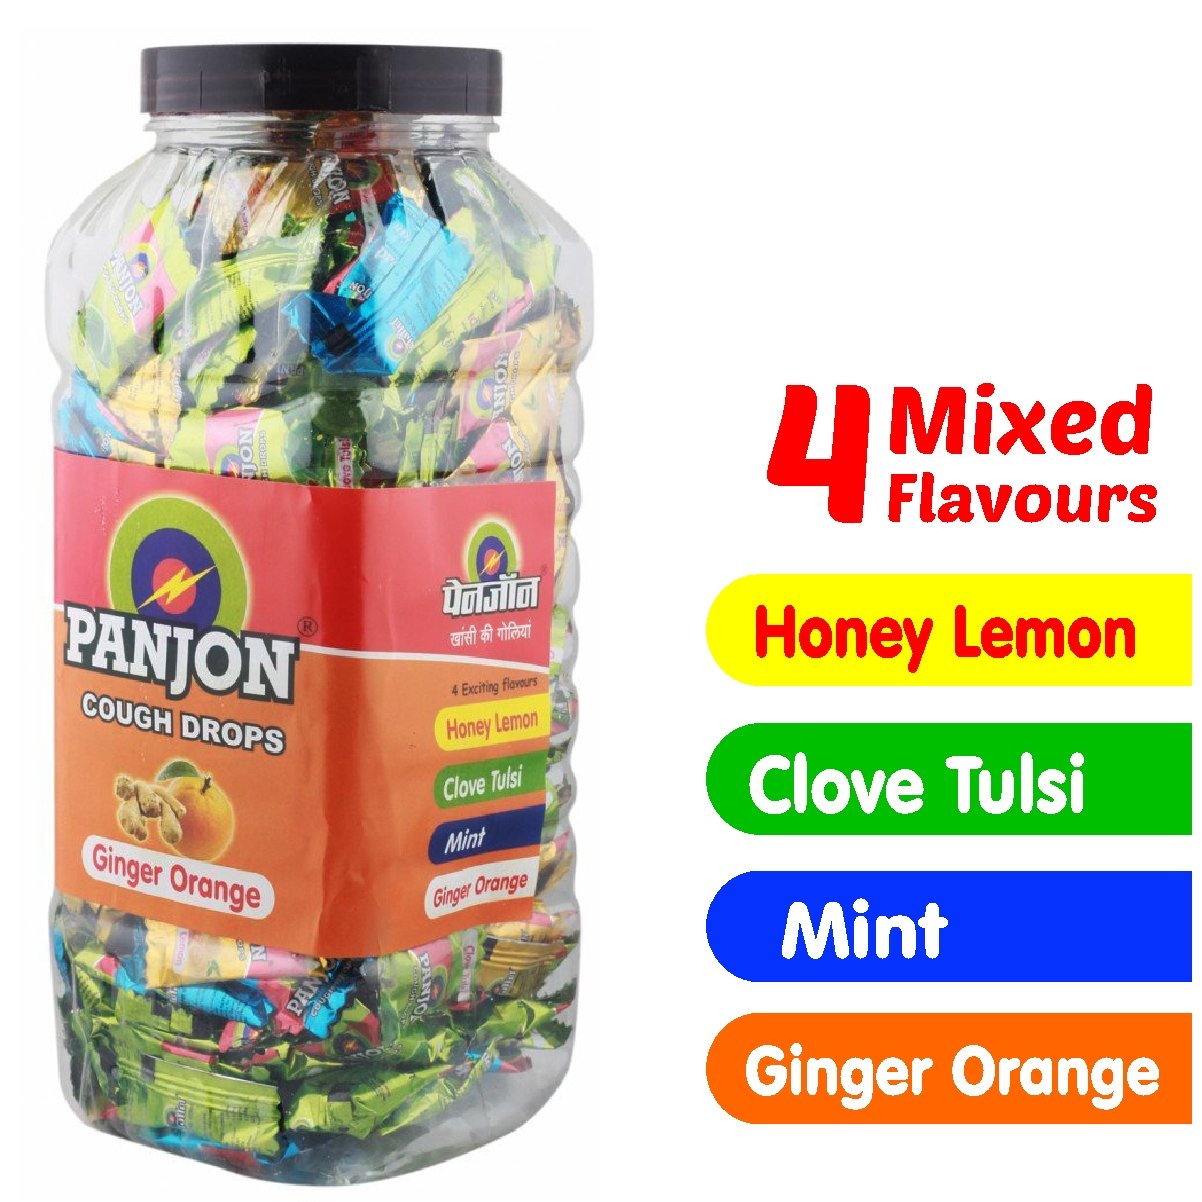 Panjon Cough Drops Mixed Candies Jar, Ginger Orange, Clove Tulsi, Mint and Honey Lemon, 300 Candies